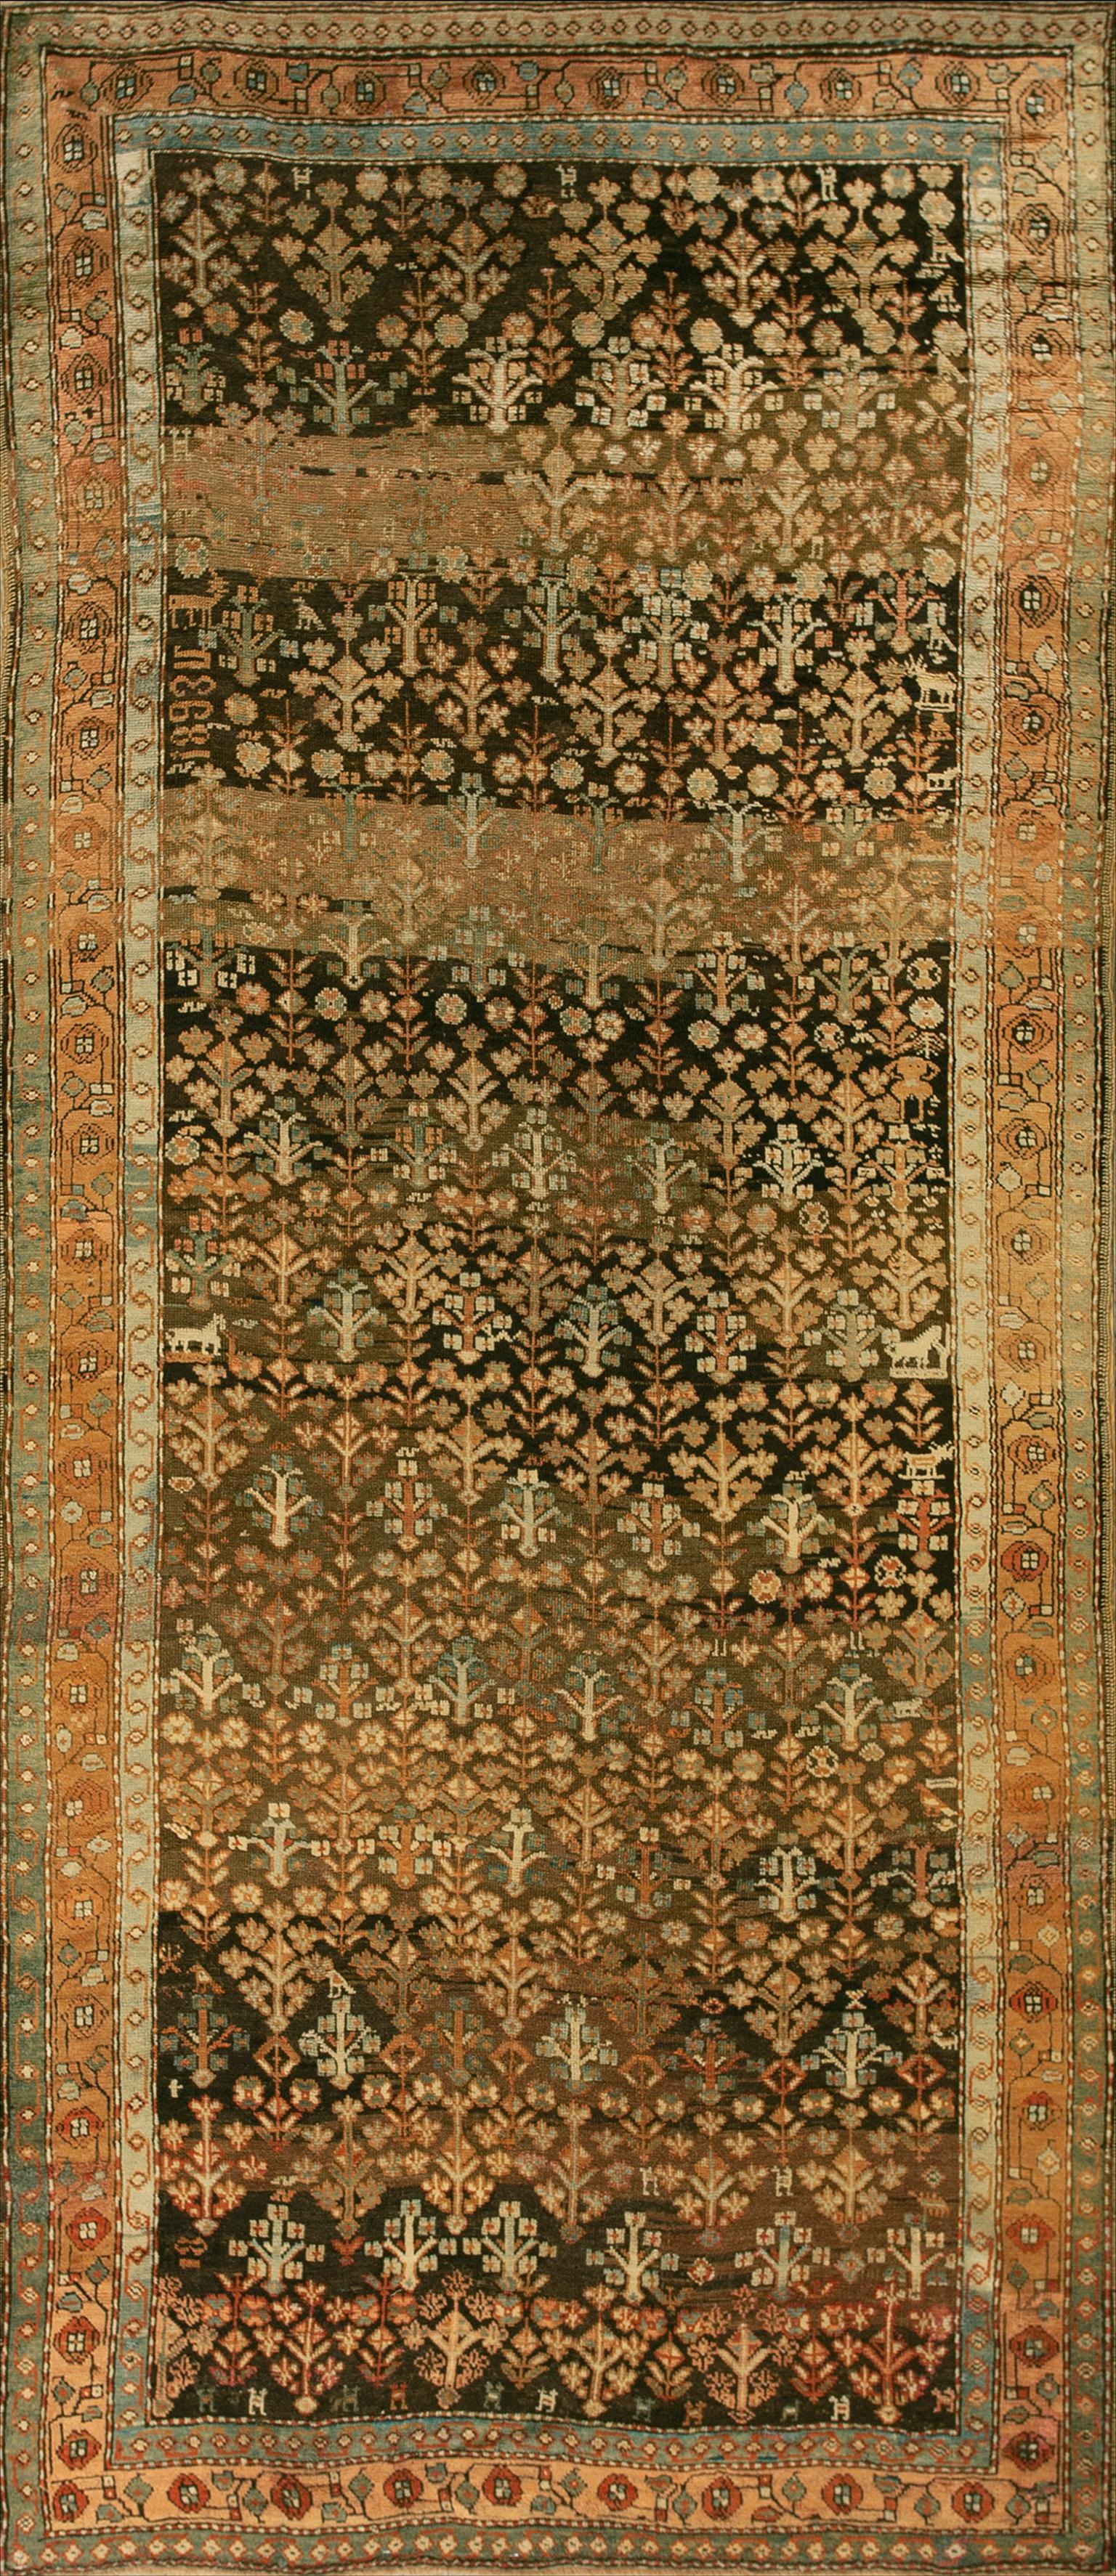 19th Century Caucasian Karabagh Shrub Carpet ( 4'6" x 10"9" - 137 x 328 ) For Sale